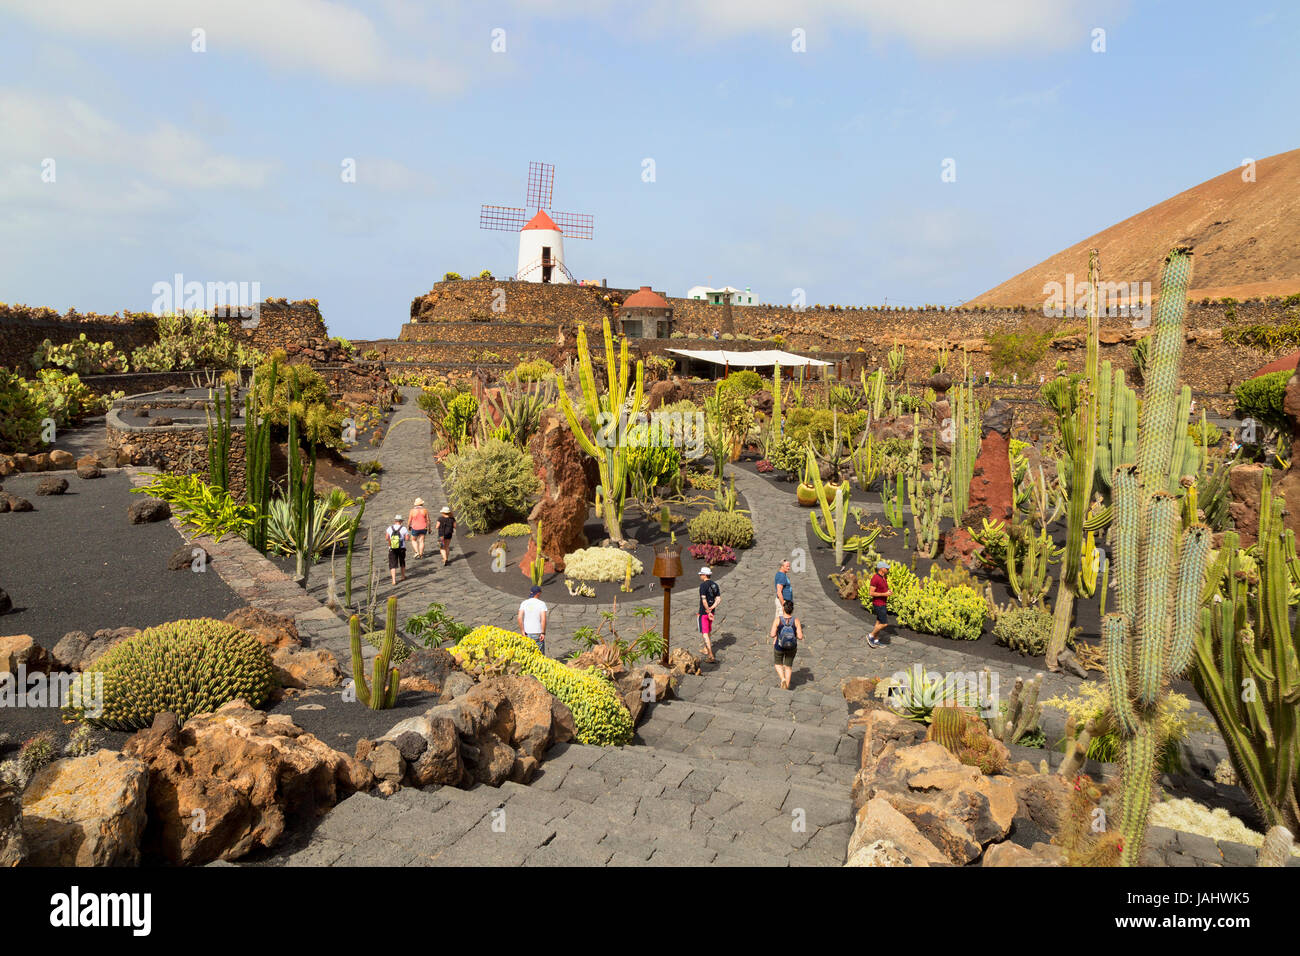 Jardin de cactus de Lanzarote ou jardin de cactus, conçu par l'artiste local Cesar Manrique, Lanzarote, Canaries, l'Europe Banque D'Images